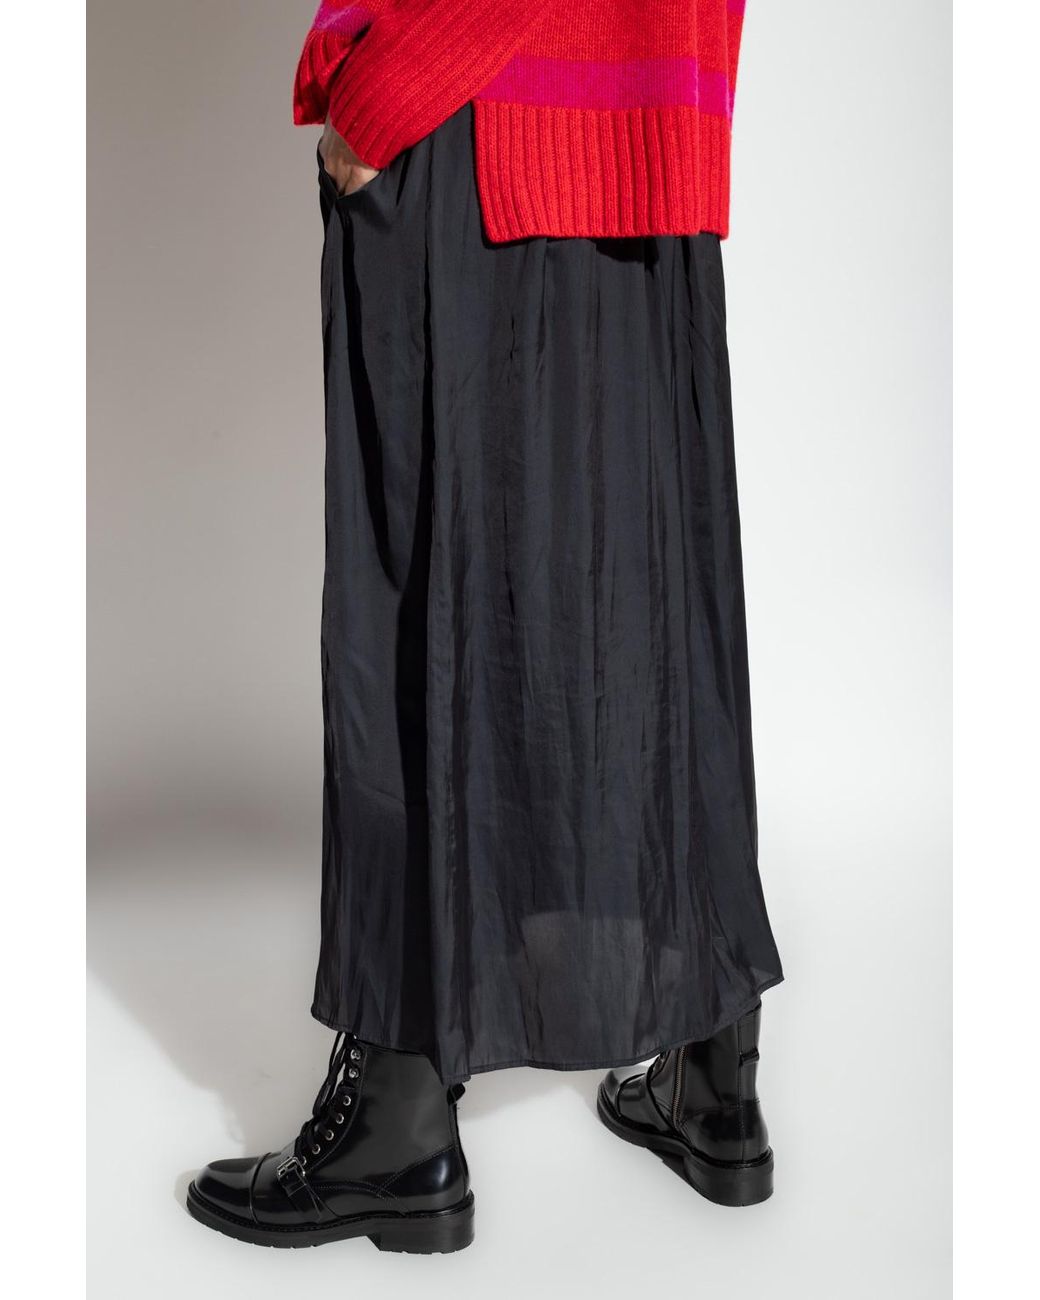 Zadig & Voltaire 'jade' Satin Skirt in Black | Lyst